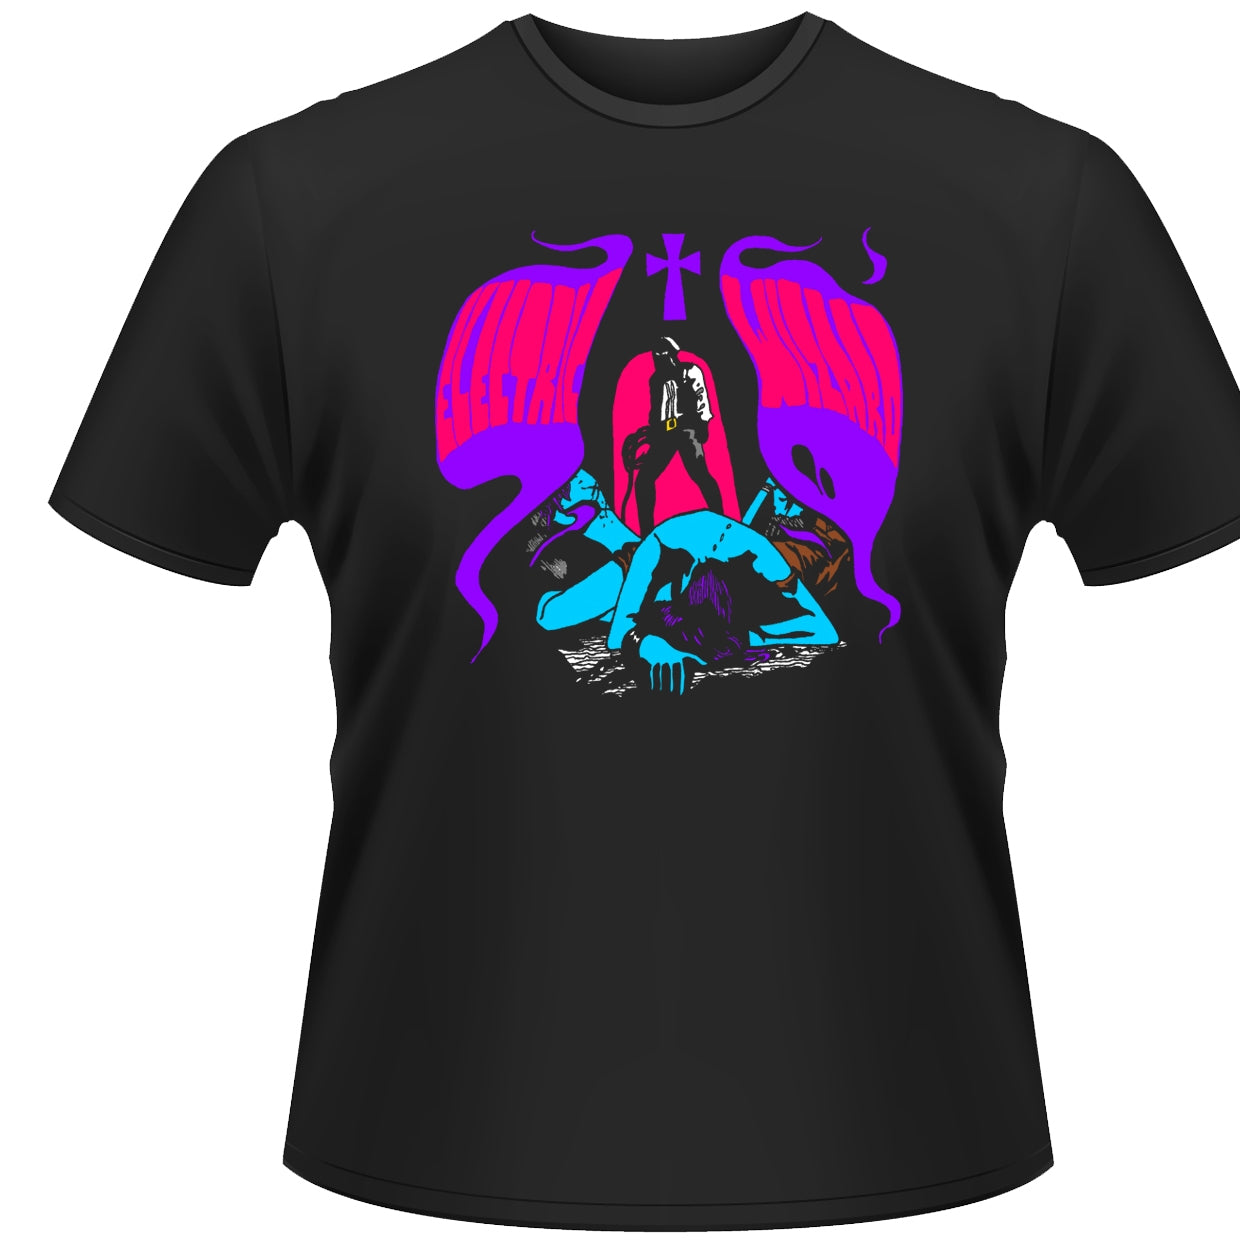 Electric Wizard "Witchfinder" T shirt